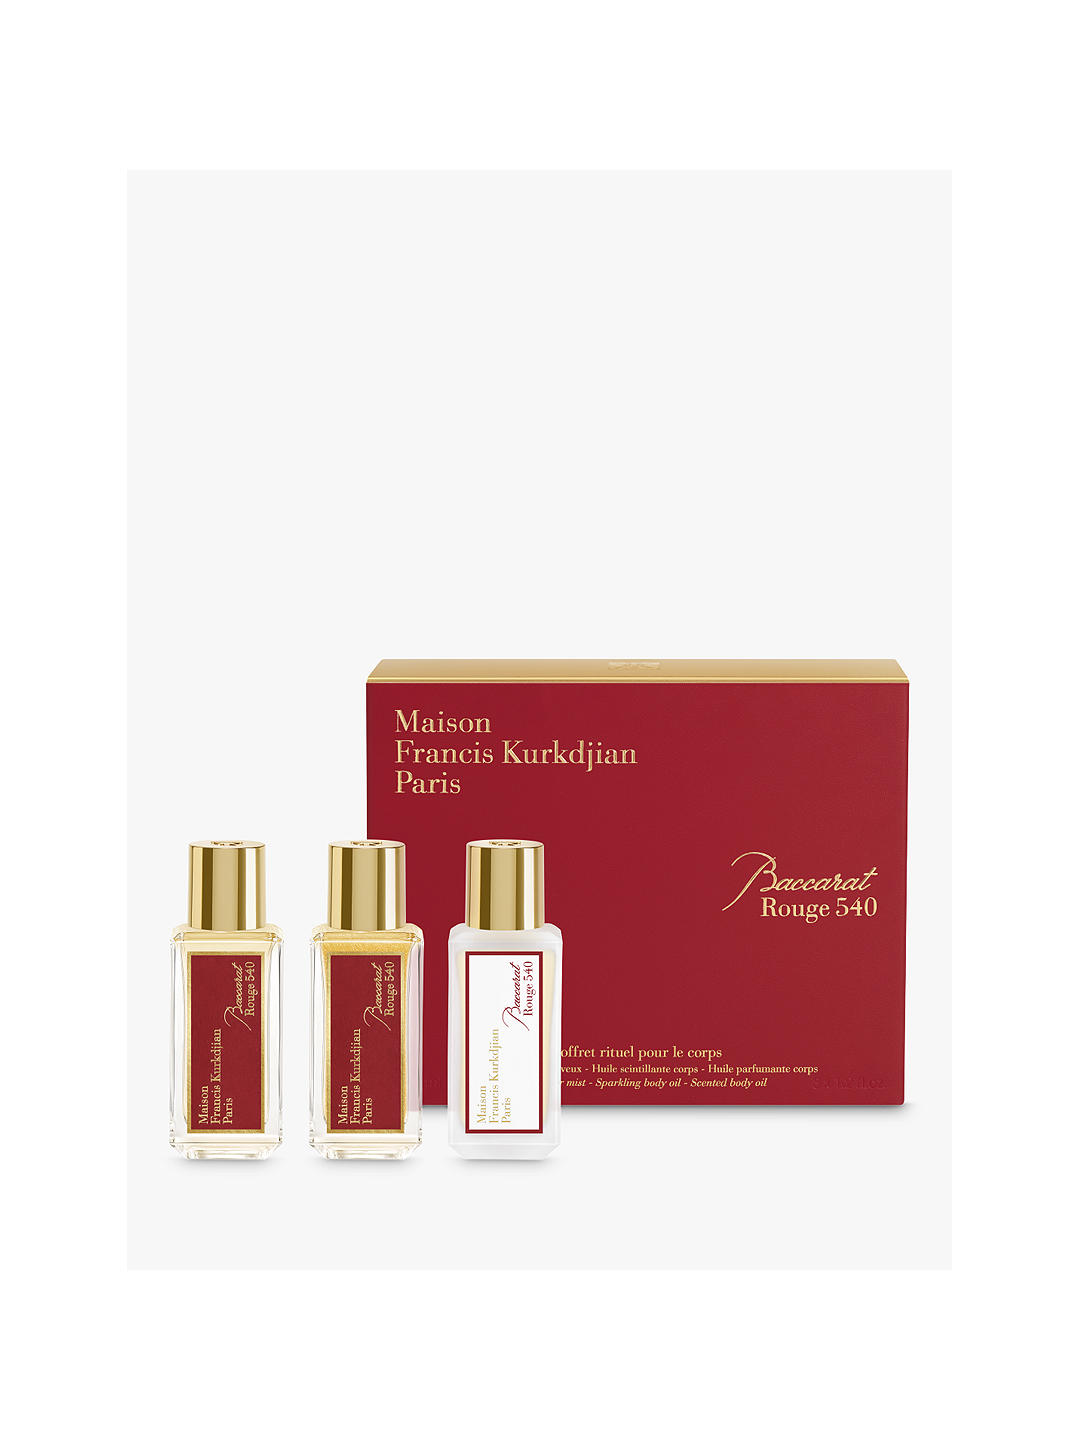 Maison Francis Kurkdjian Baccarat Rouge 540 Body Ritual Bodycare Gift Set 1